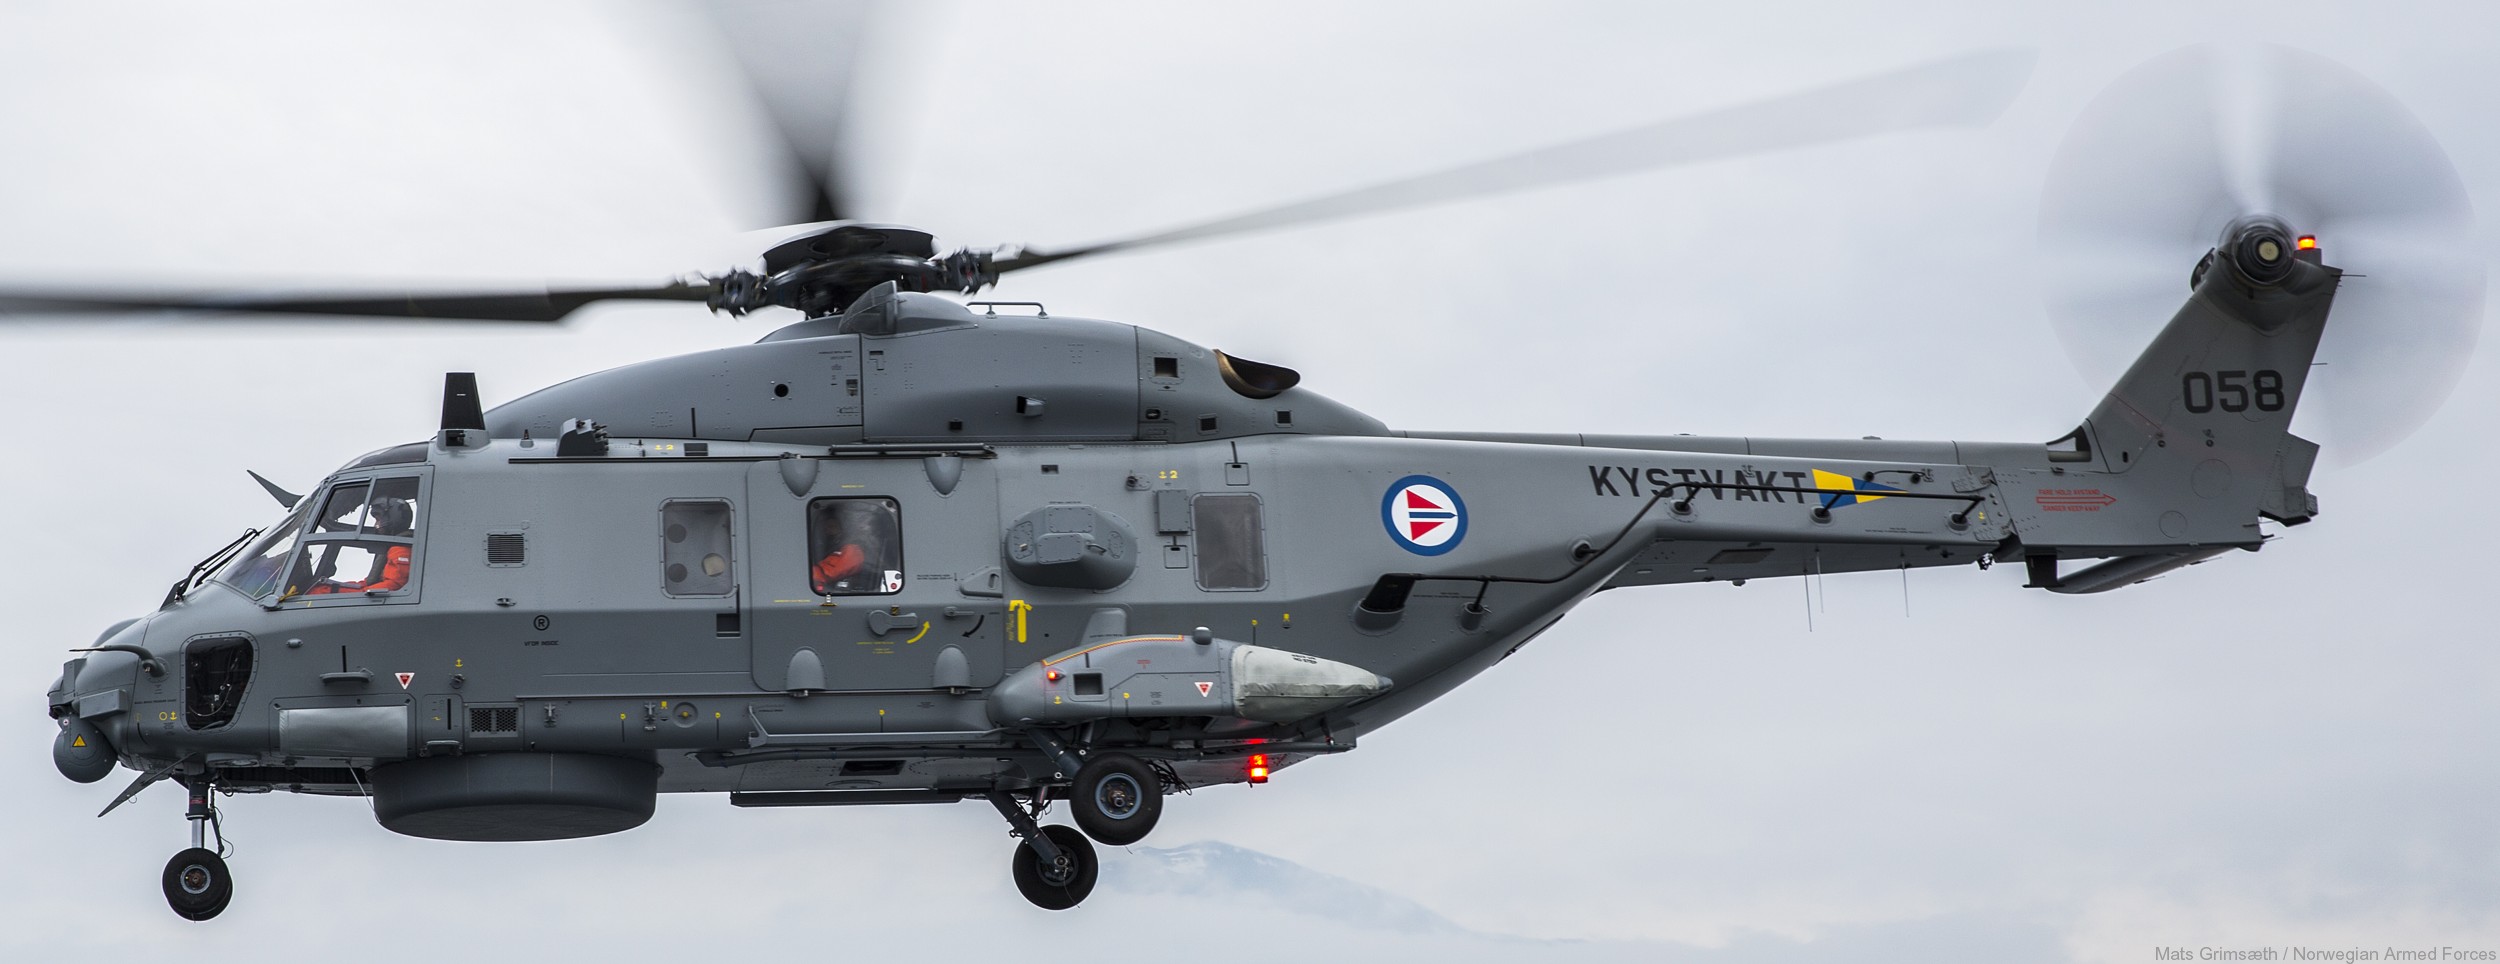 nh90 nfh asw helicopter royal norwegian coast guard navy air force kystvakt sjoforsvaret 058 02